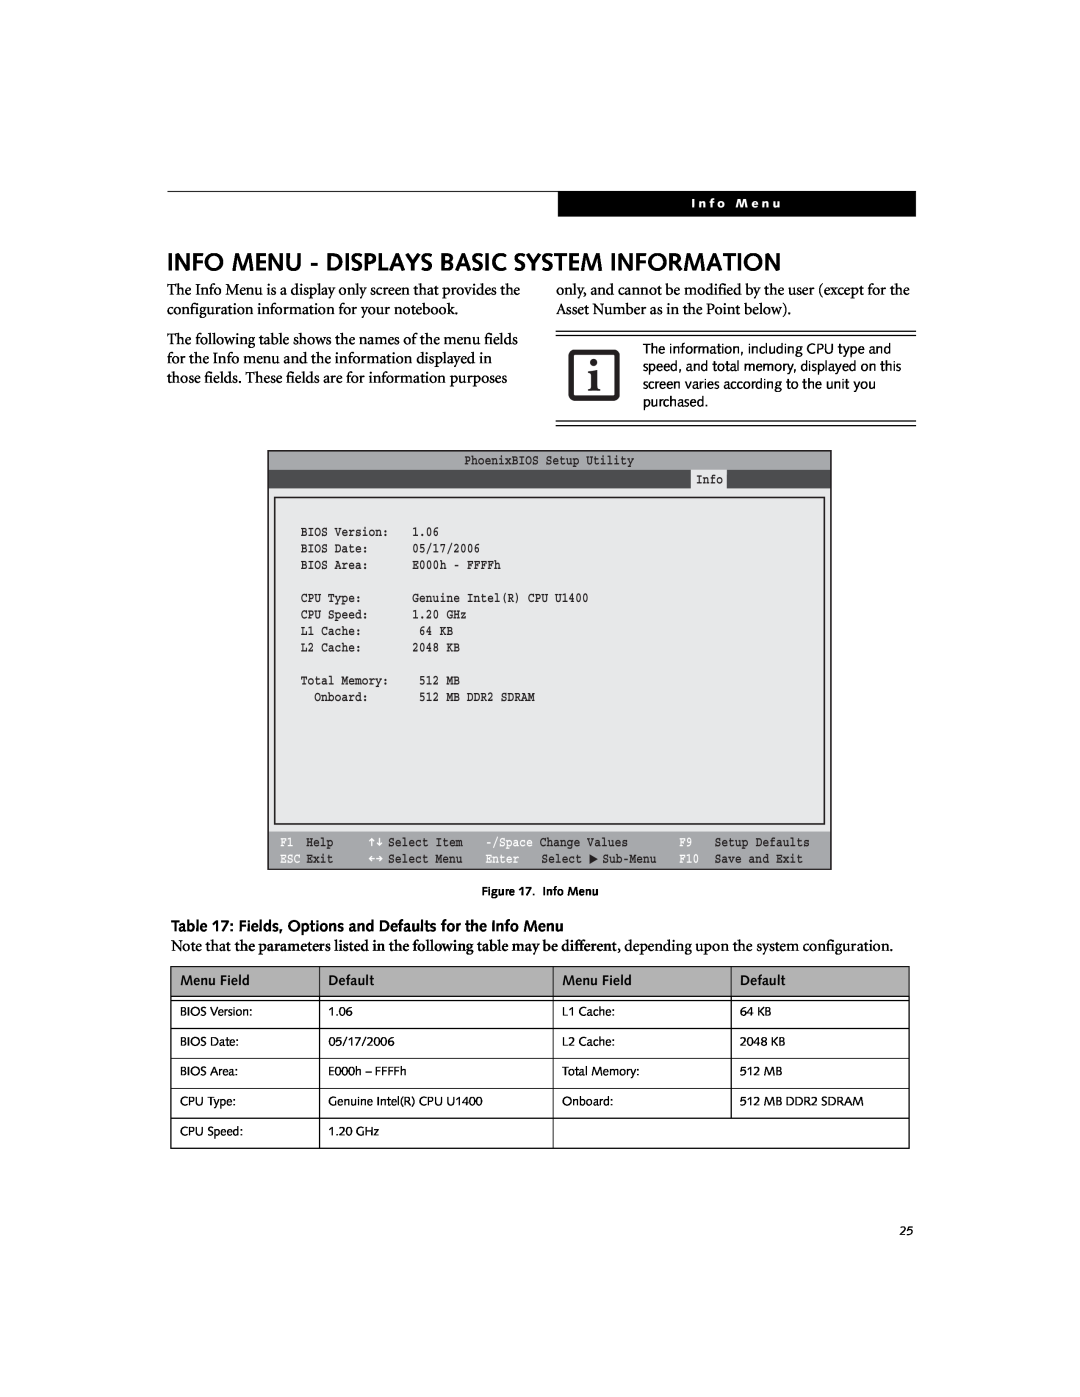 Fujitsu Q2010 manual Info Menu - Displays Basic System Information, Fields, Options and Defaults for the Info Menu 